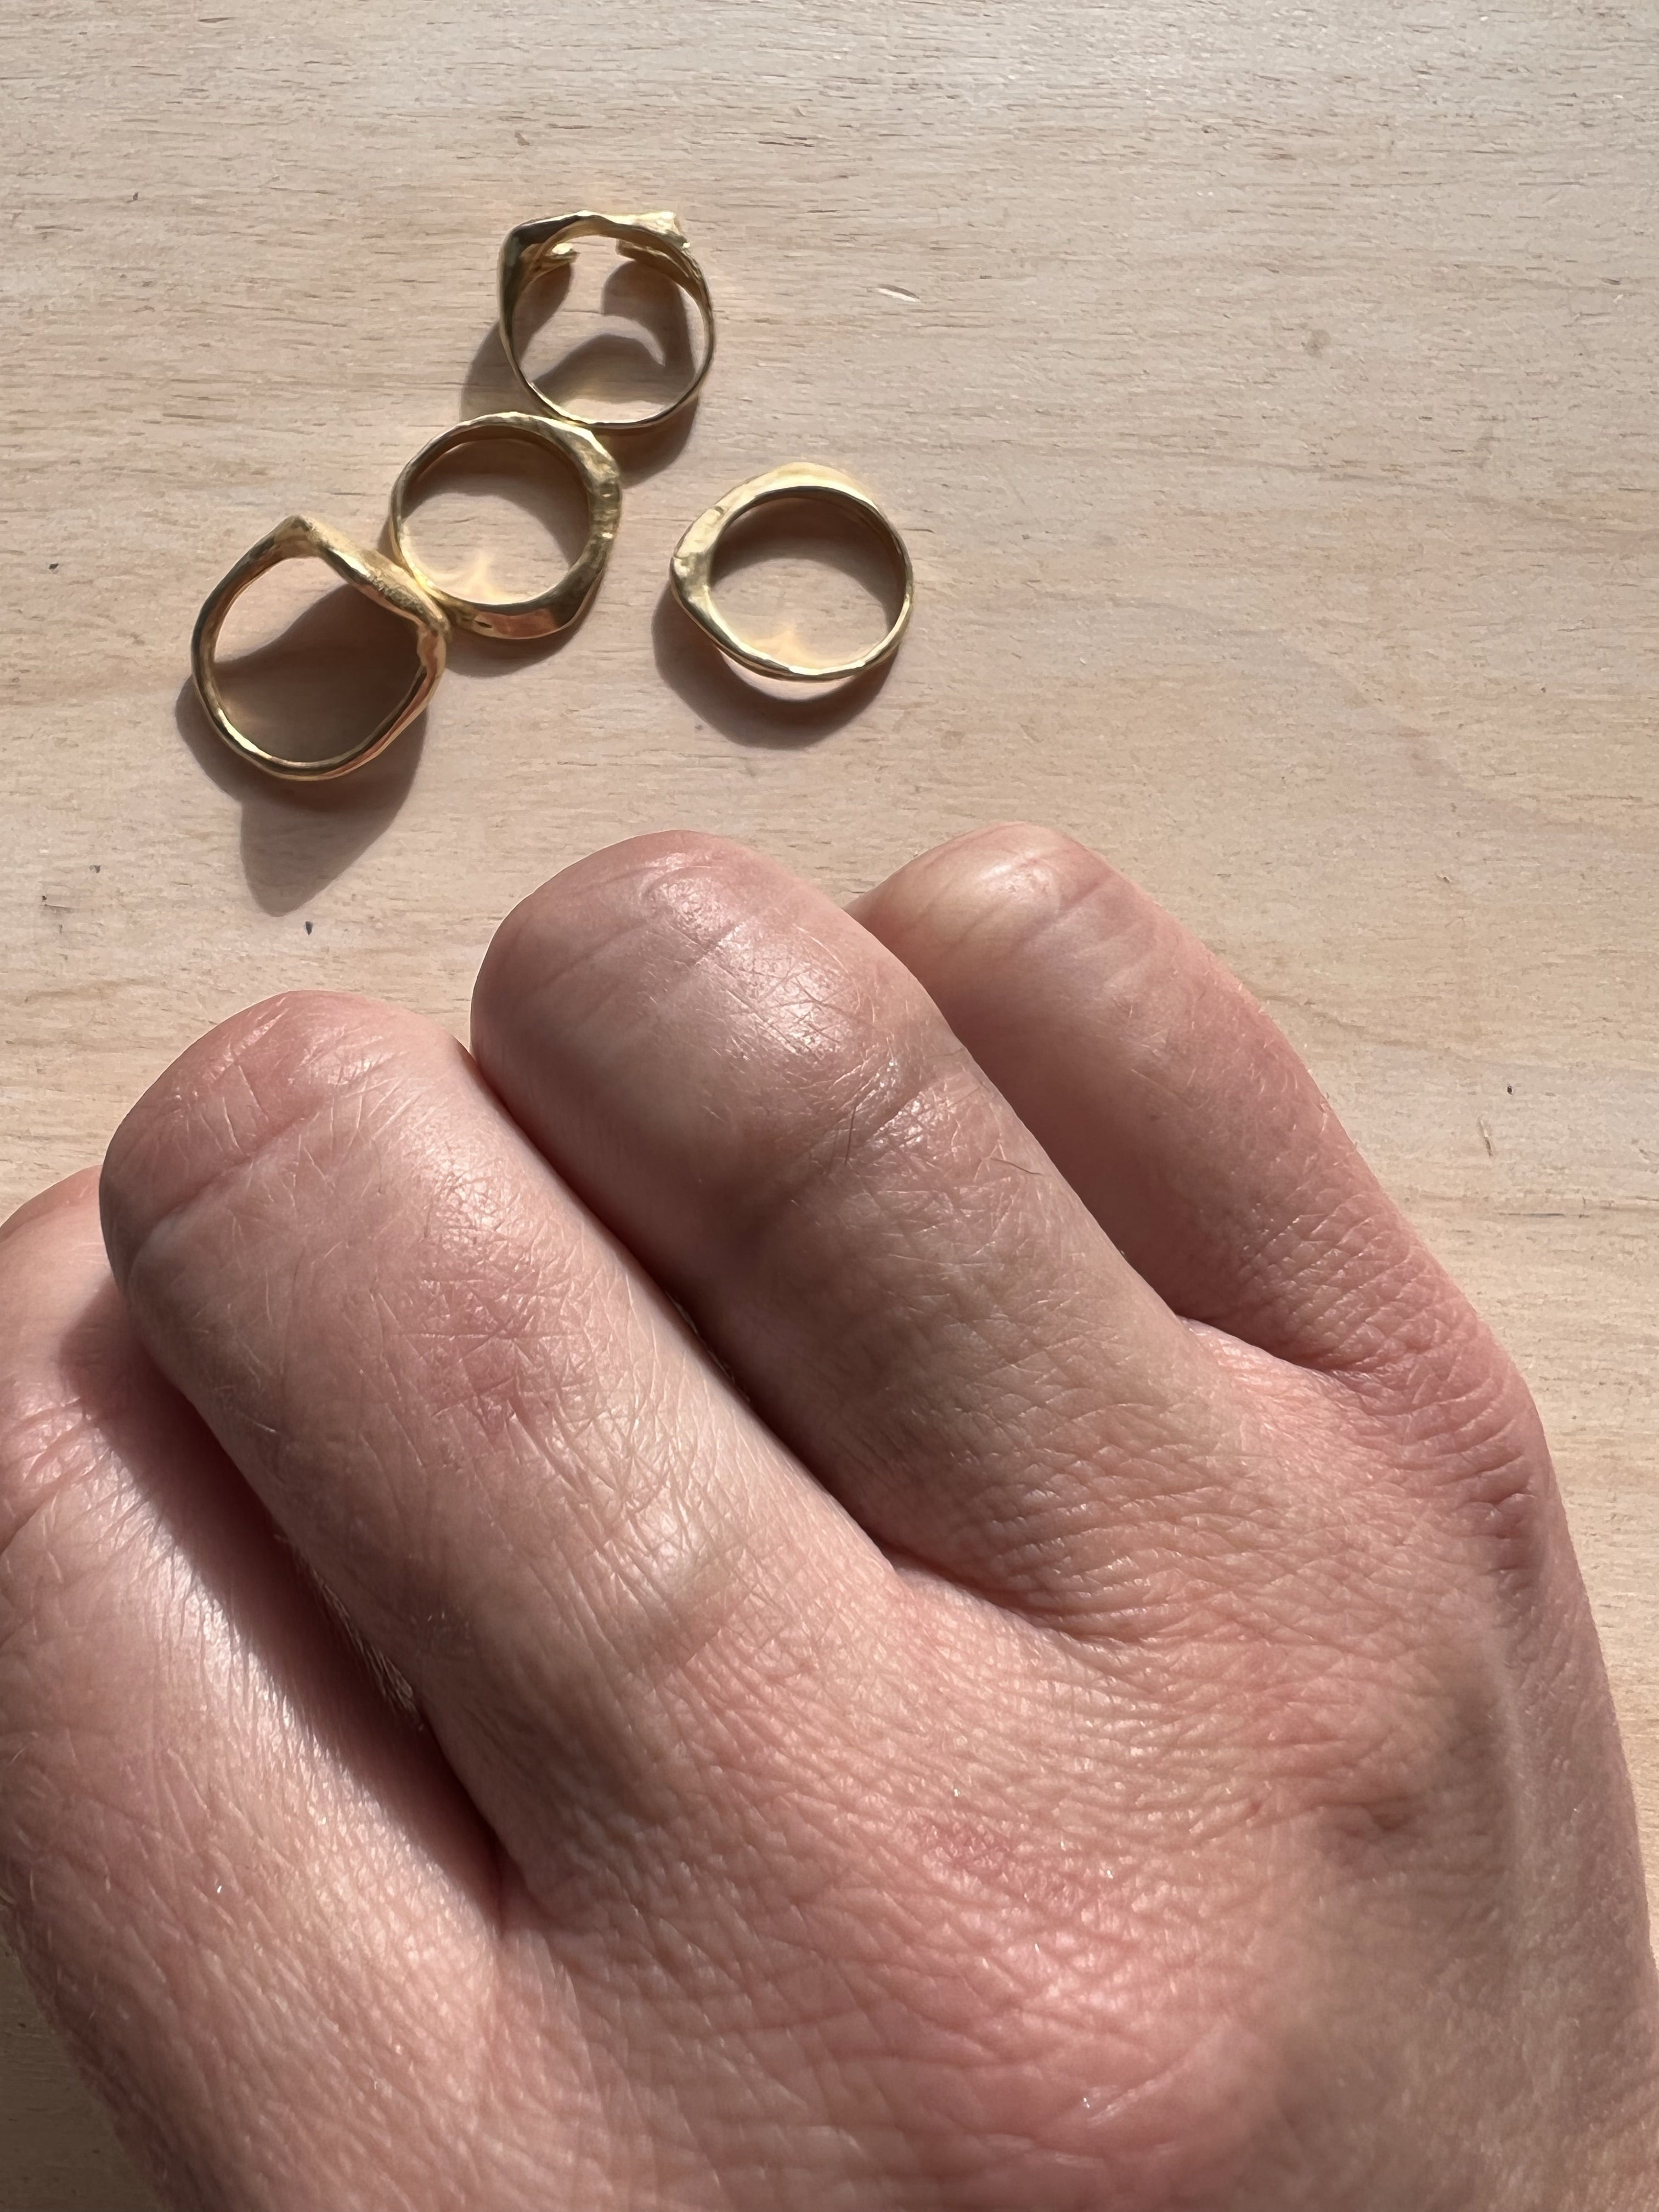 Buy morir Gold Plated Brass Swastik Symbol on Tortoise Vaastu Fengshui Good  Luck Finger Ring Men Women at Amazon.in